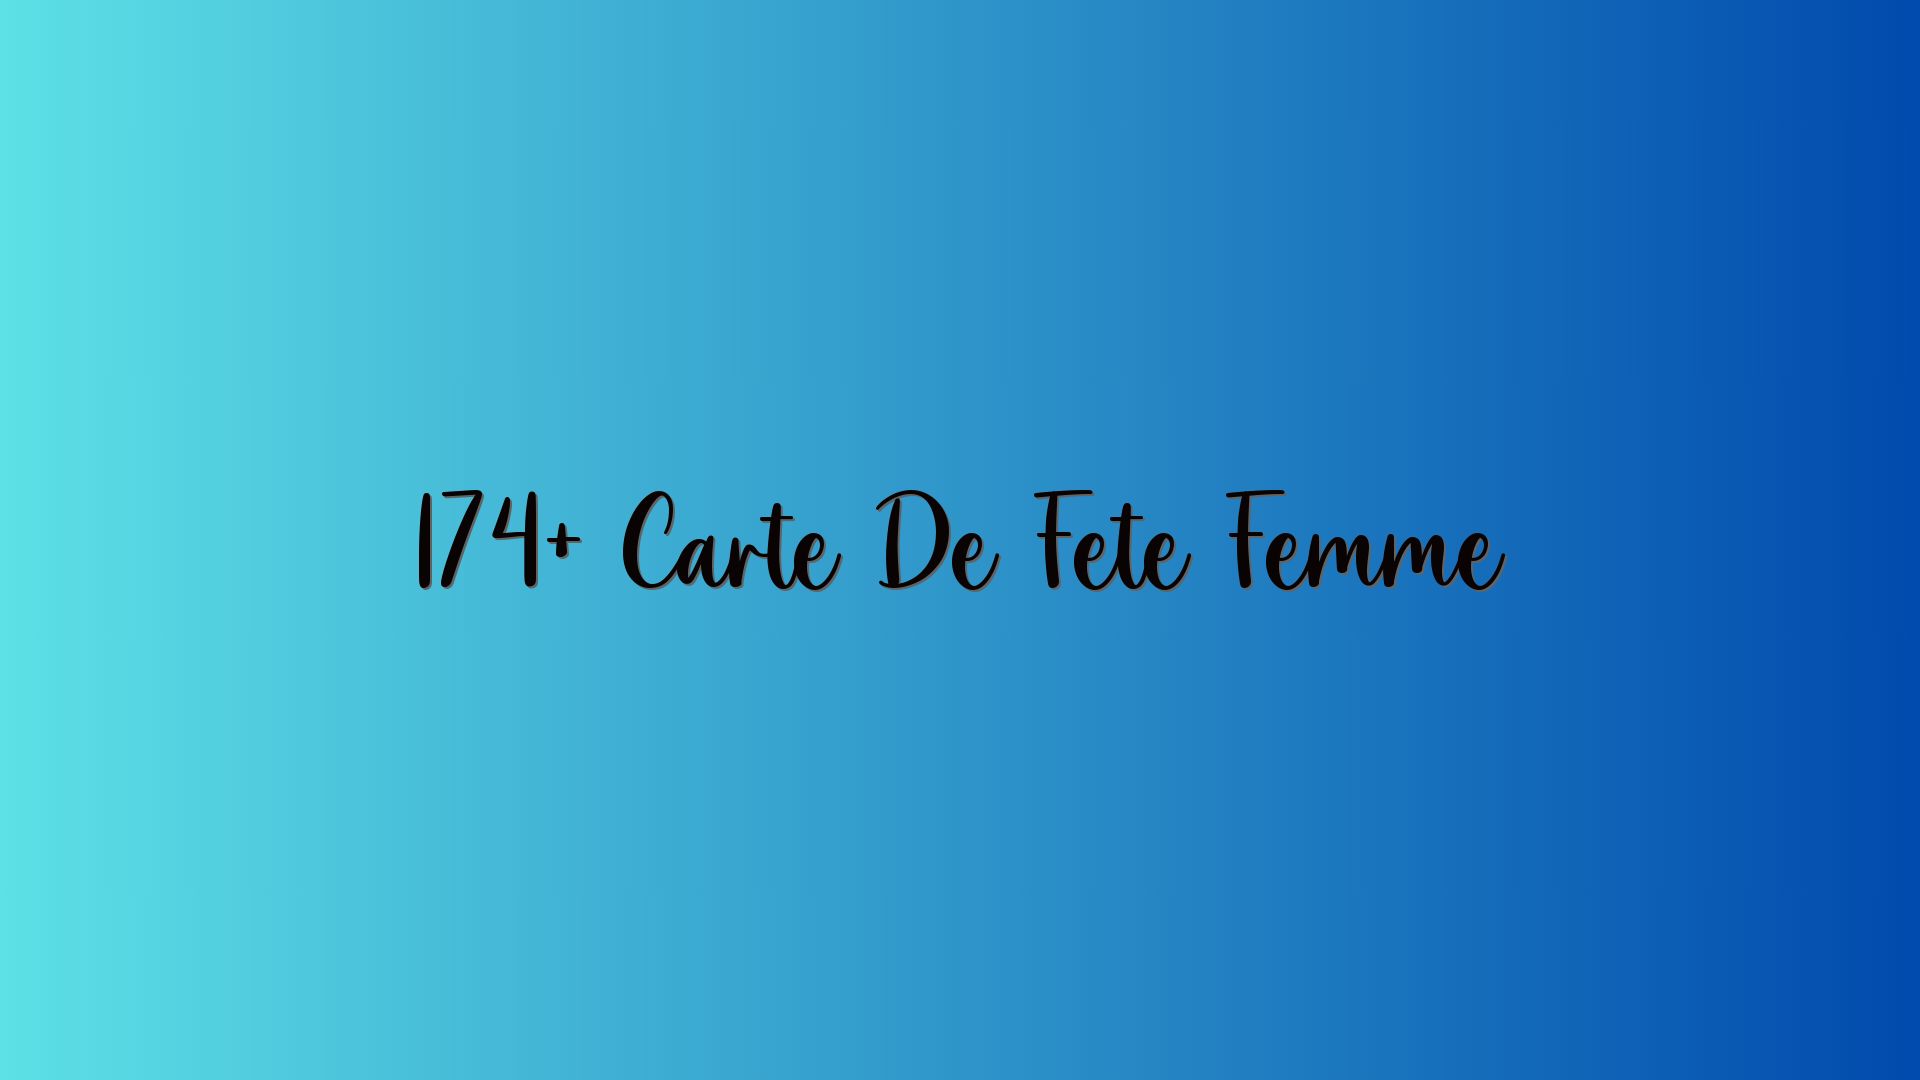 174+ Carte De Fete Femme